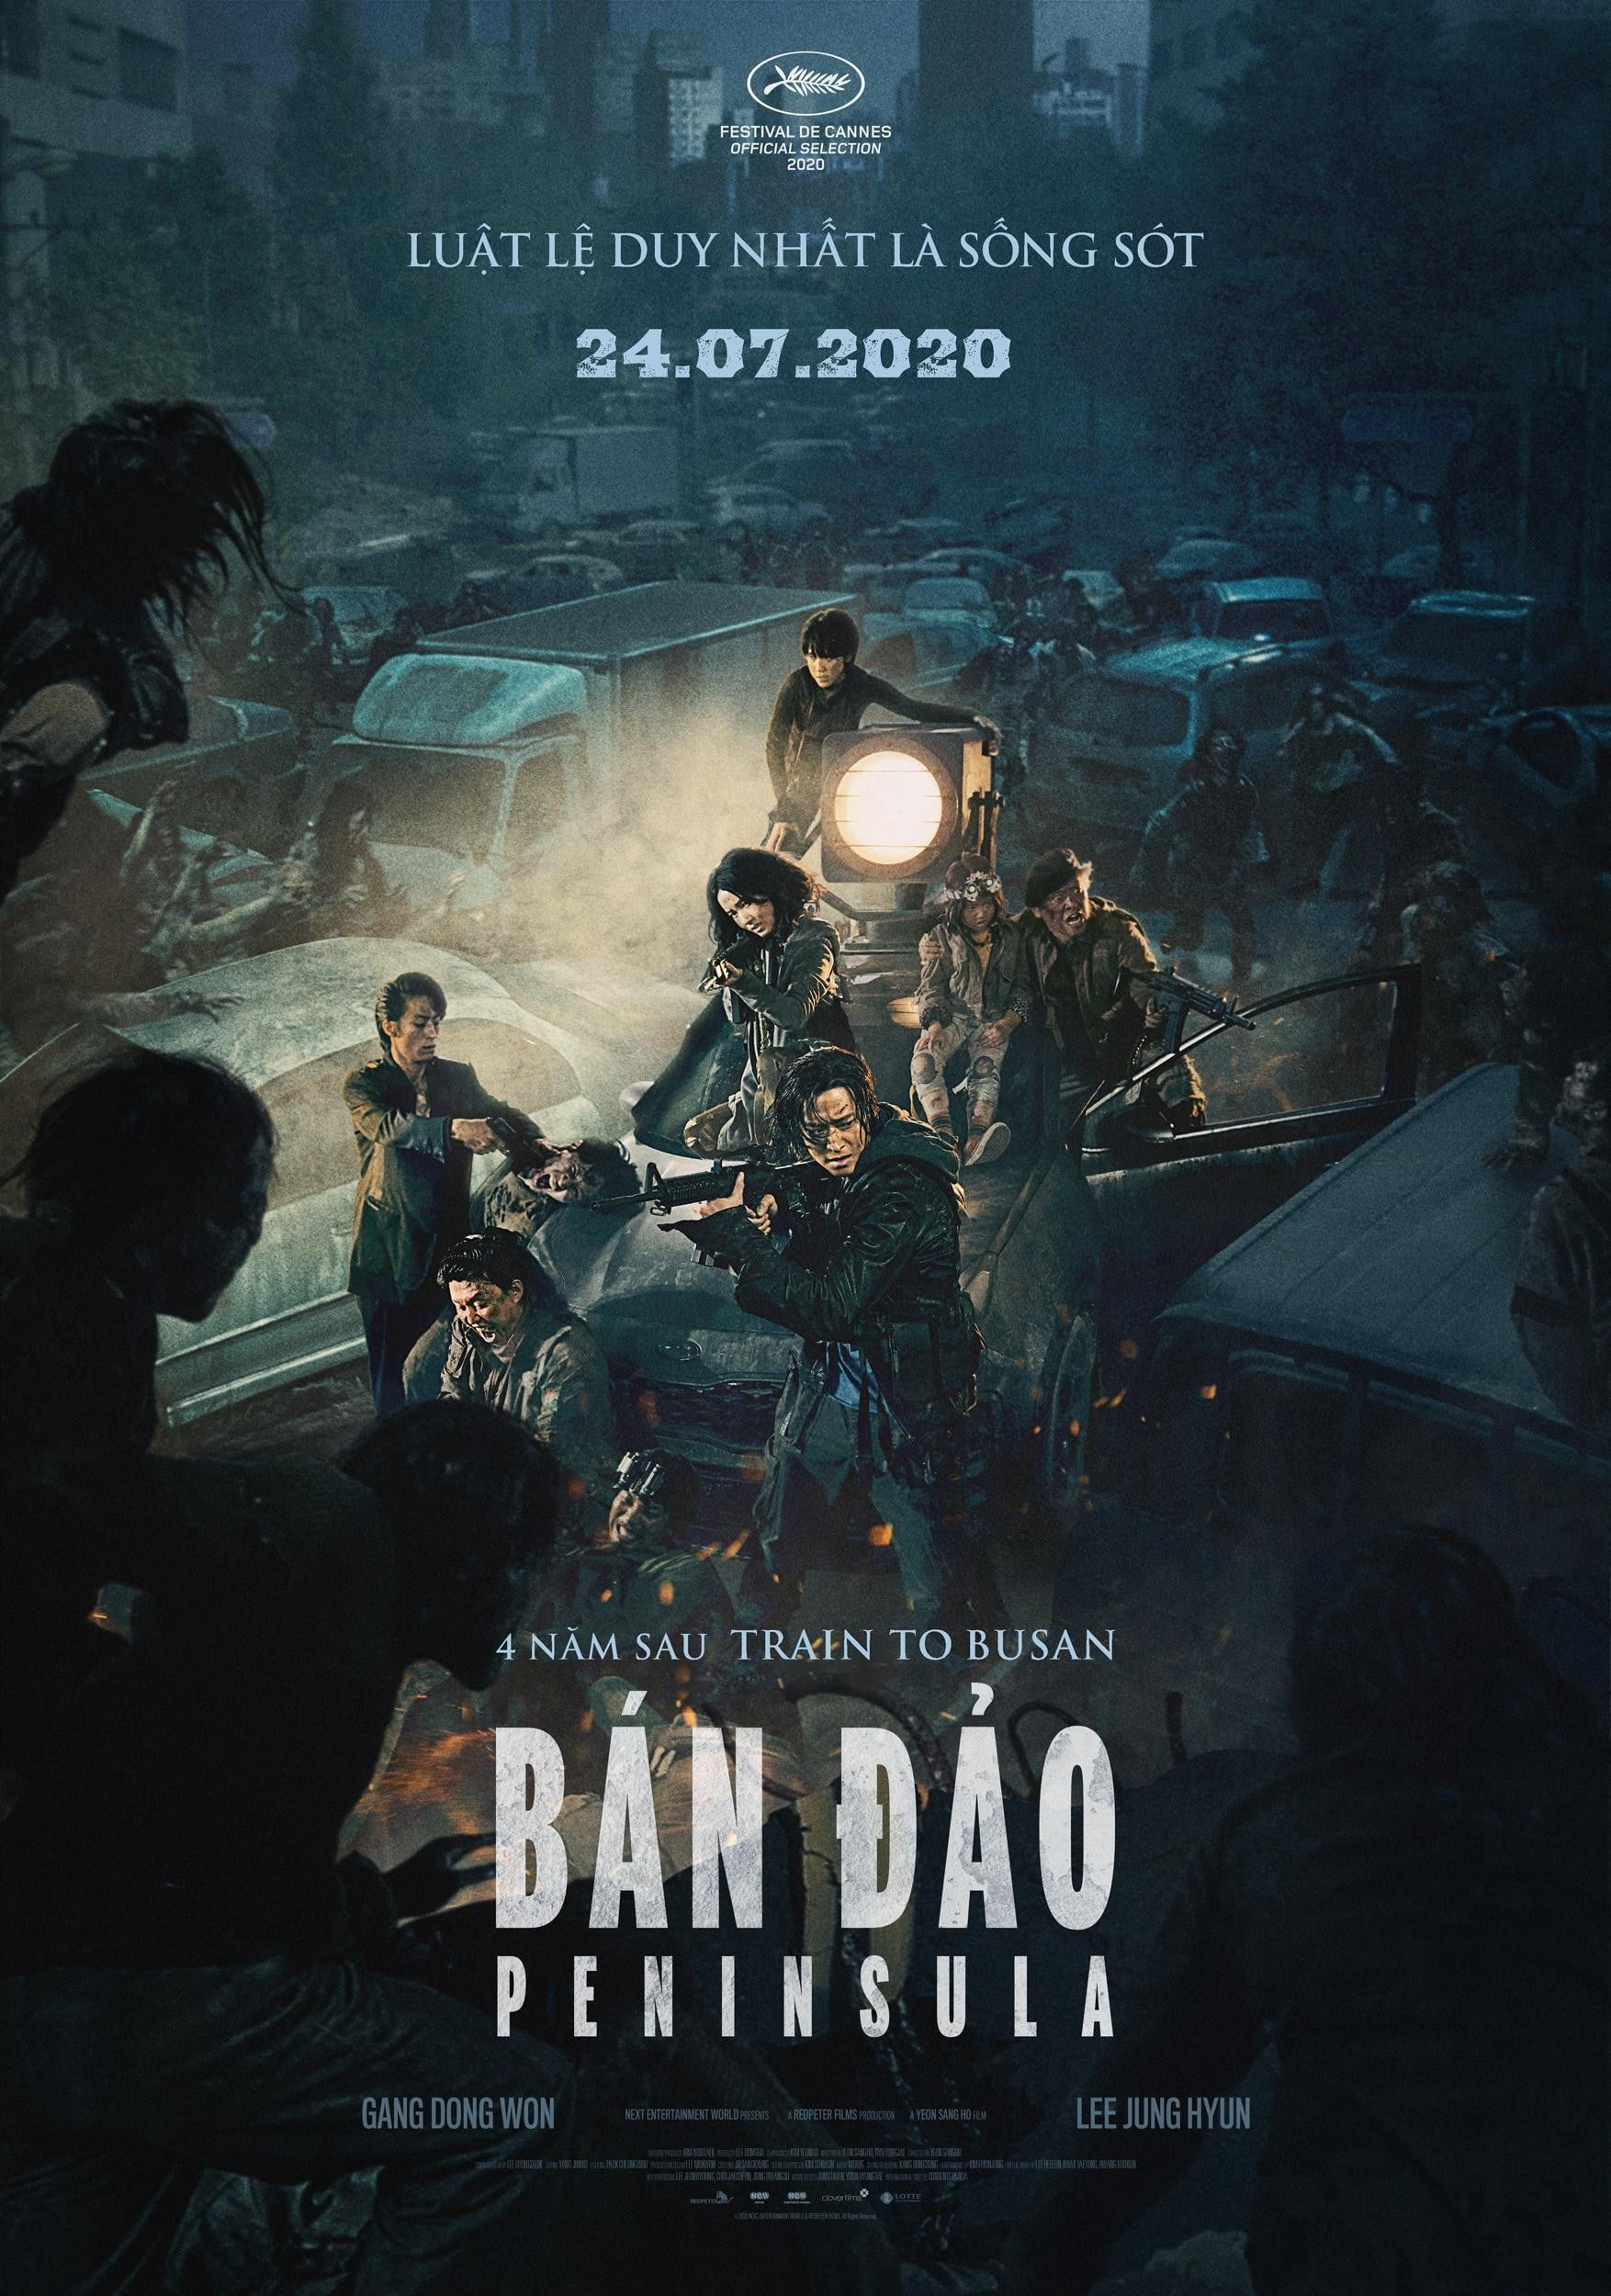 Poster Phim Train To Busan 2: Bán Đảo Peninsula (Peninsula)